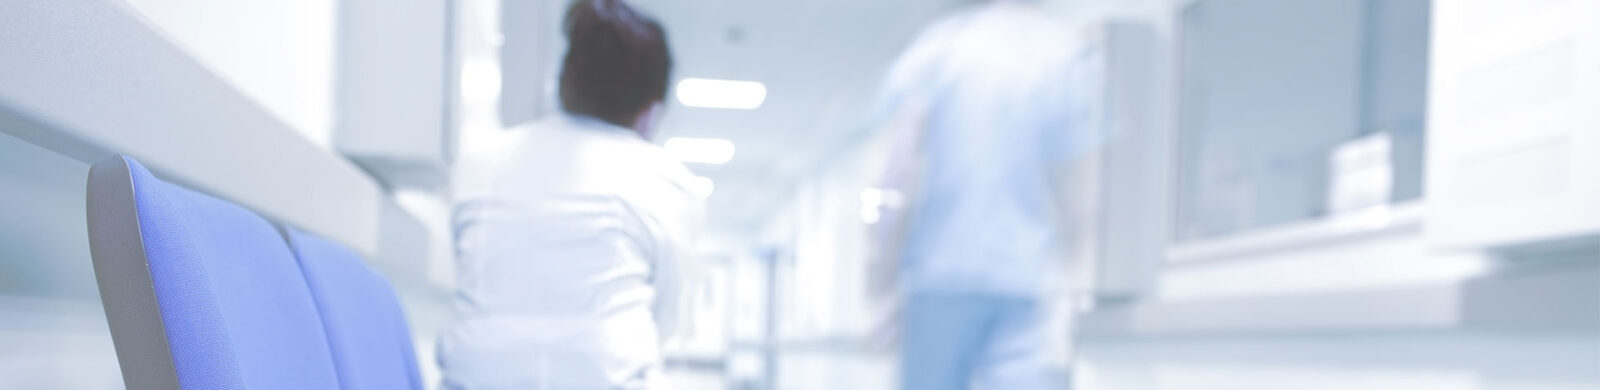 doctor and nurse in blurry hospital hallway